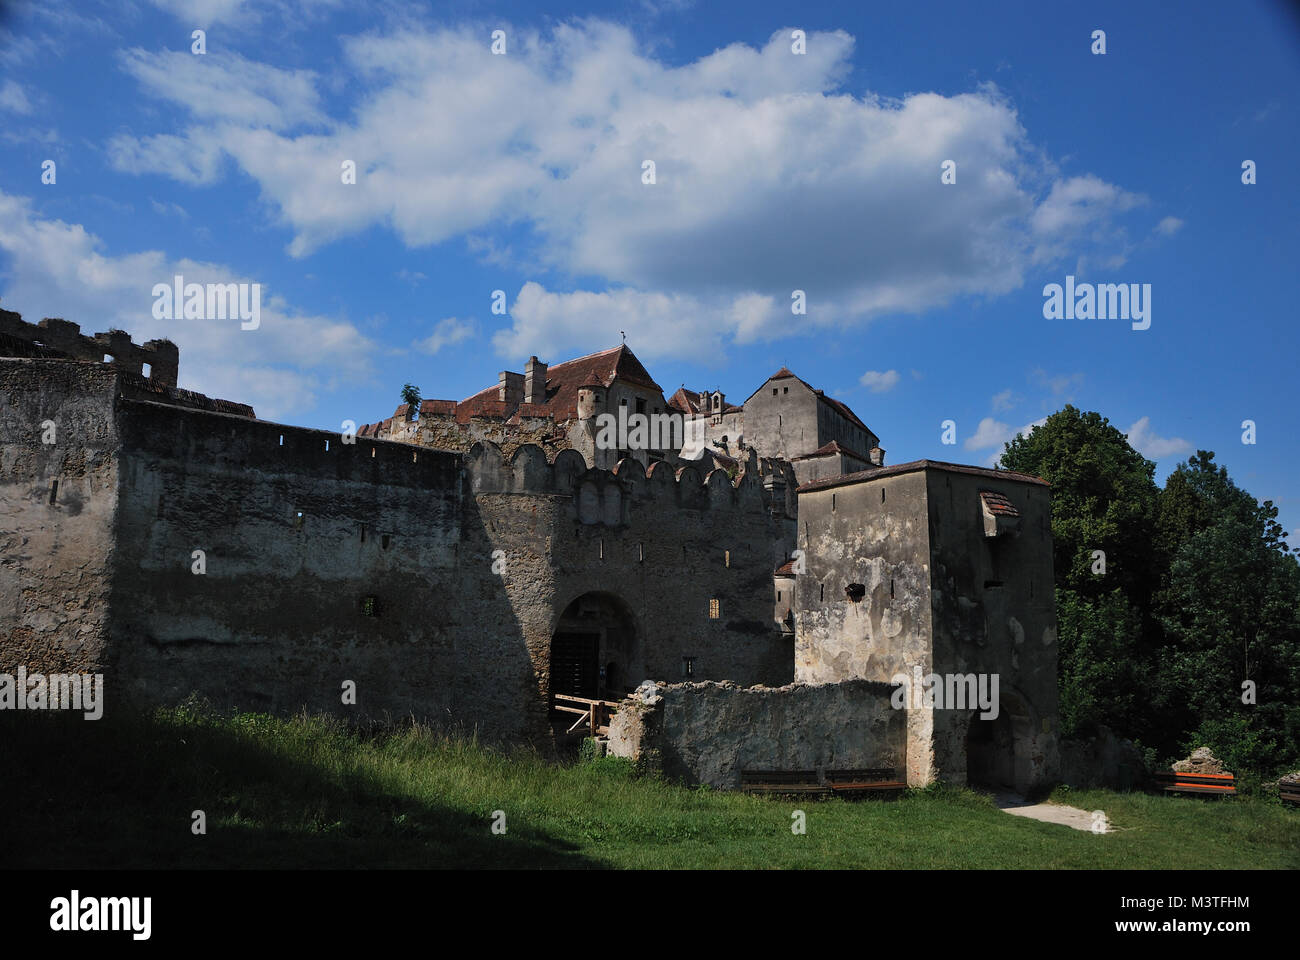 beautiful old castle castle Seebenstein in Lower Austria Austria Stock Photo